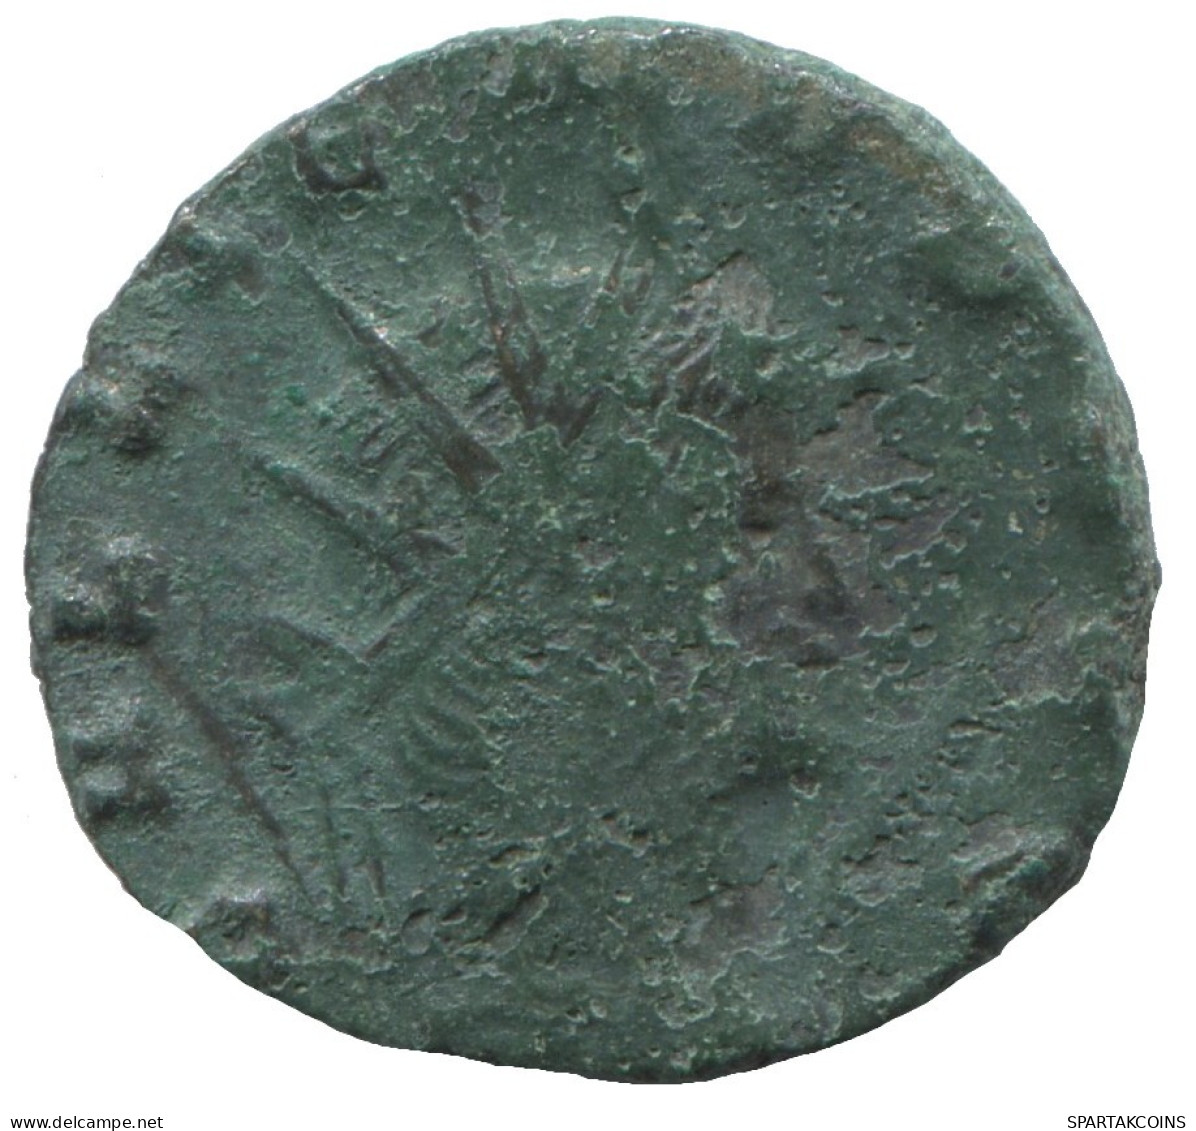 GALLIENUS ROMAN EMPIRE Follis Ancient Coin 2.2g/18mm #SAV1150.9.U.A - L'Anarchie Militaire (235 à 284)